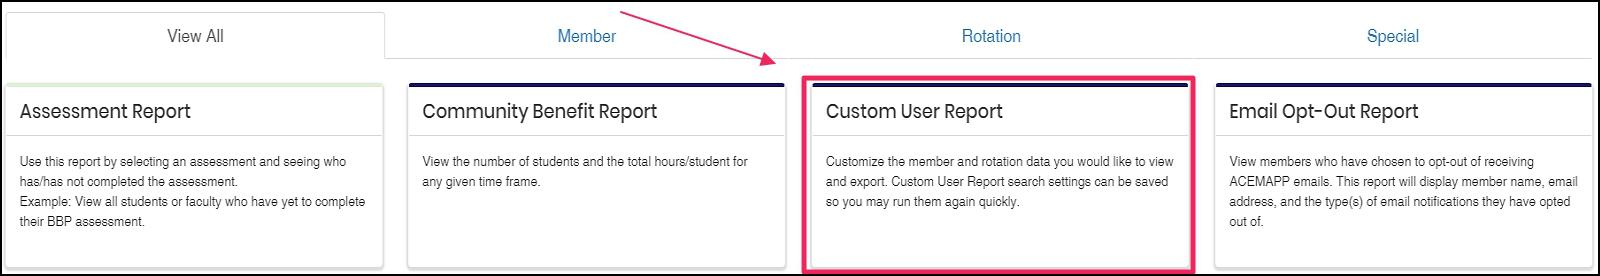 image Reports screen highlighting Custom User Report tile